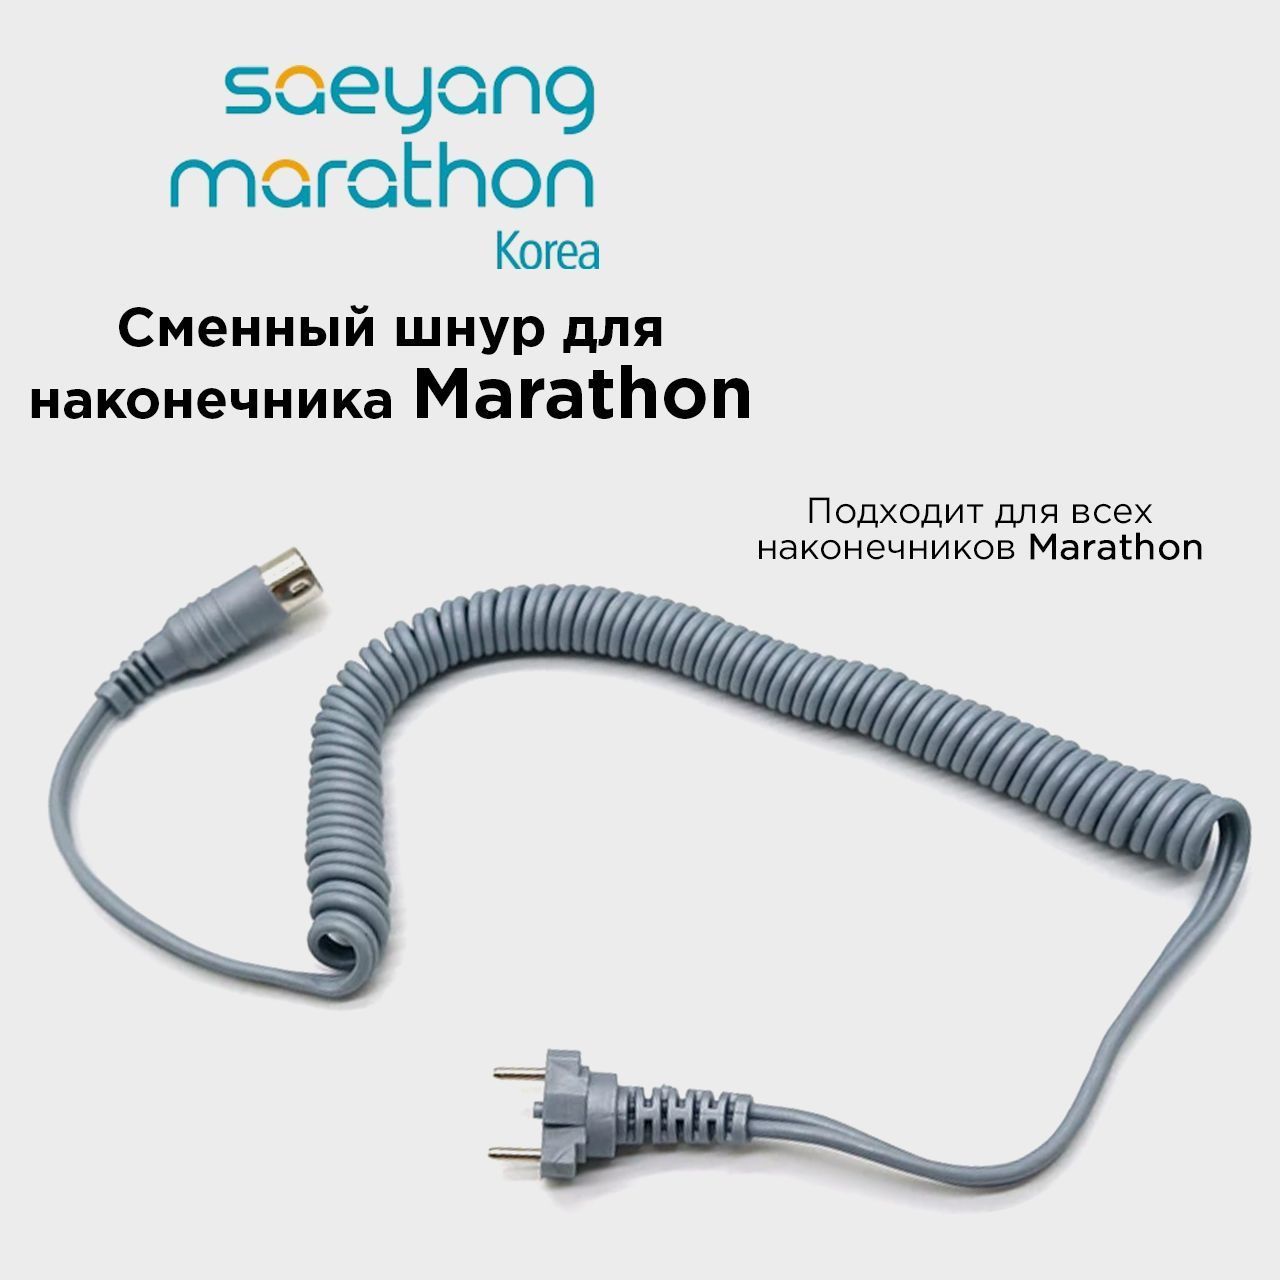 Провод для микромотора Marathon шнур для ручки наконечника Маратон Серый кабель шнур для ручки микромотора alfa nail strong 9 мм